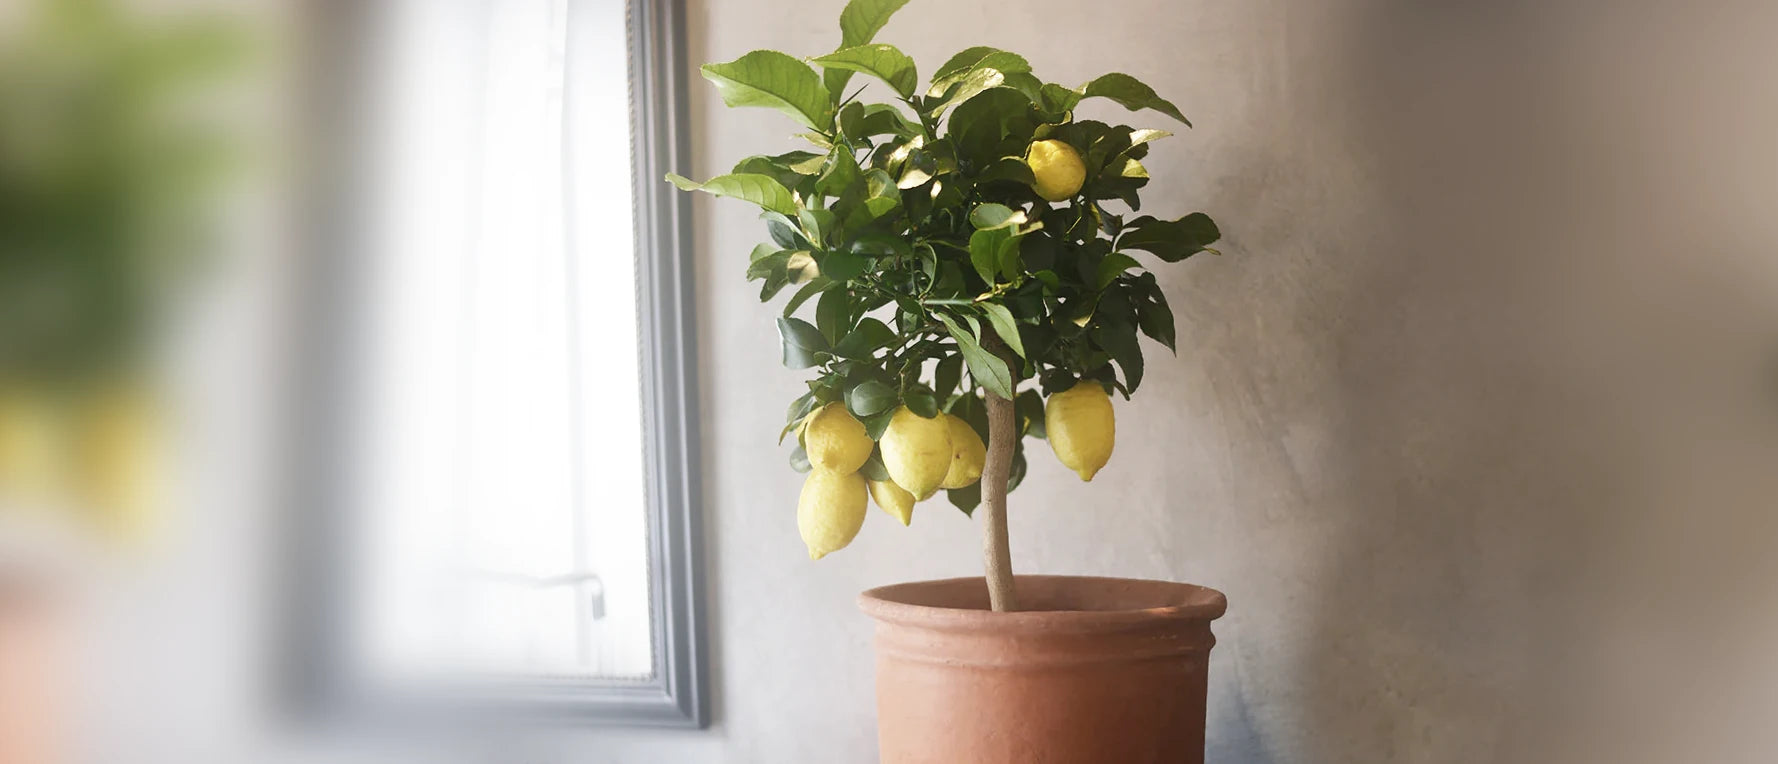 Övervintra citrus & olivträd